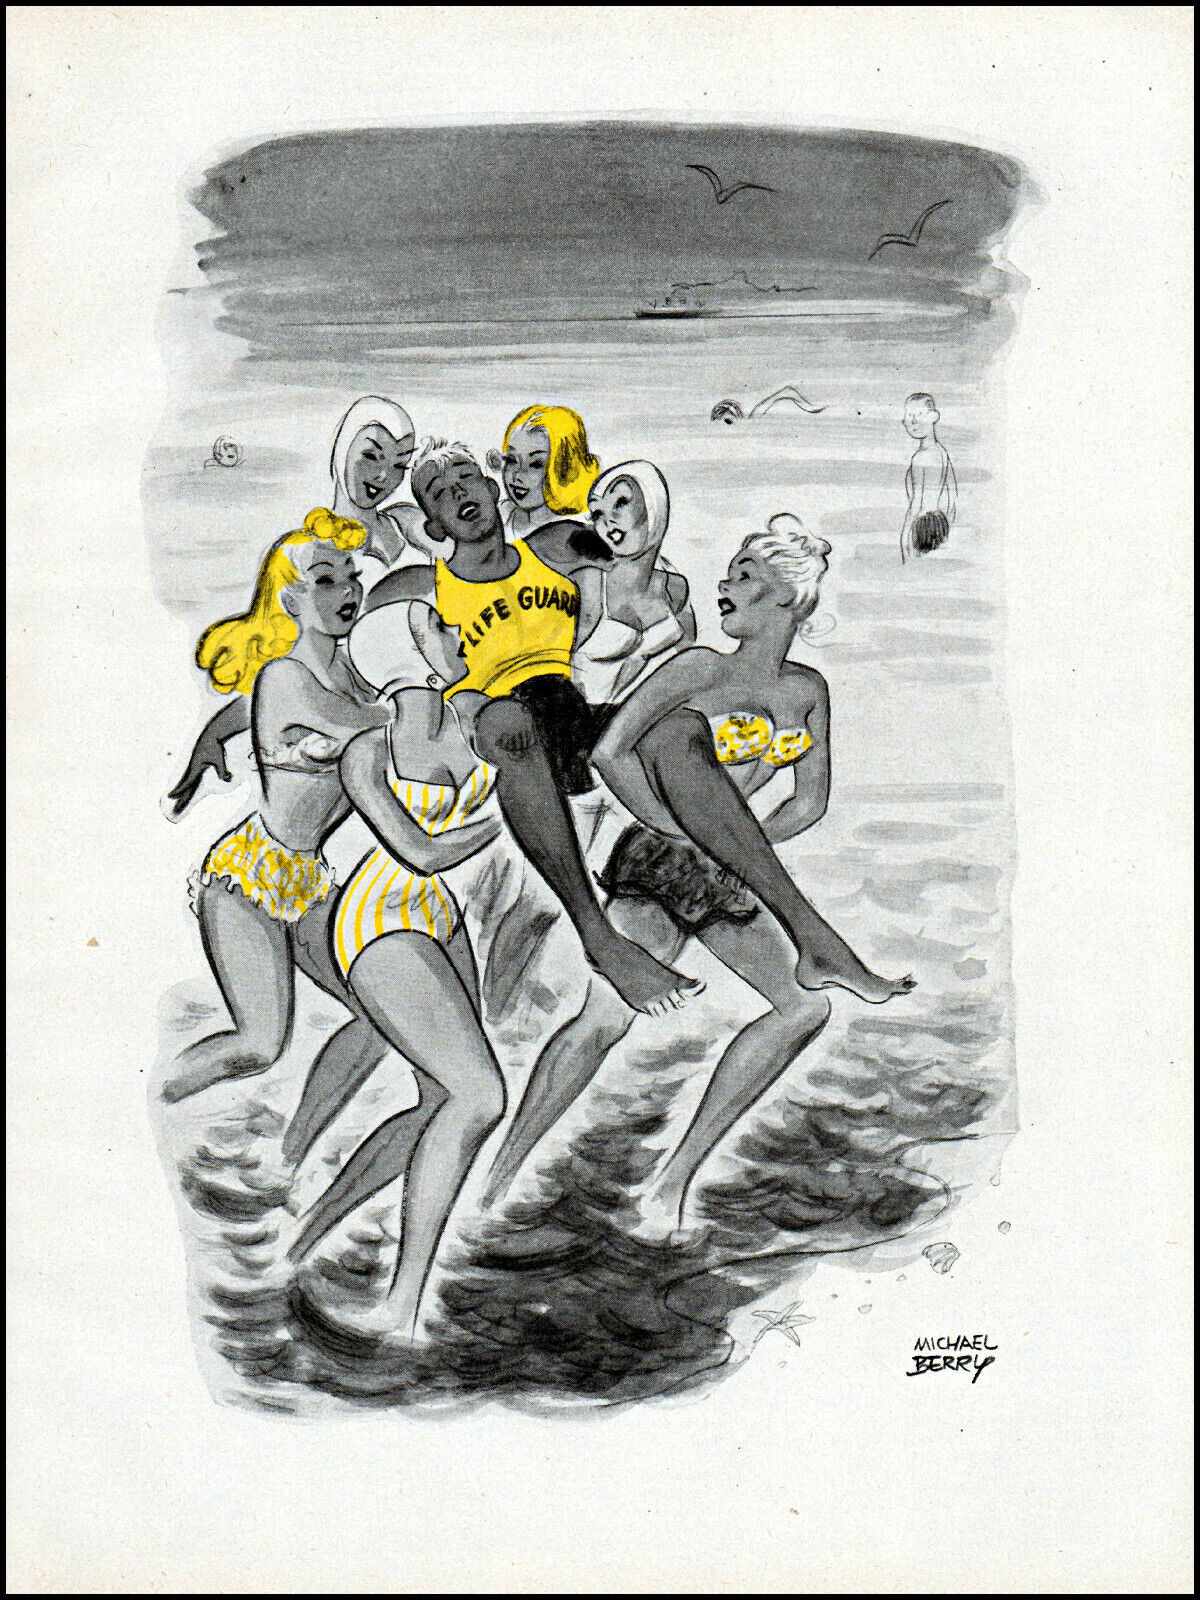 1947 Michael Berry art 6 bikini girls save lifeguard vintage comic pinup adL46